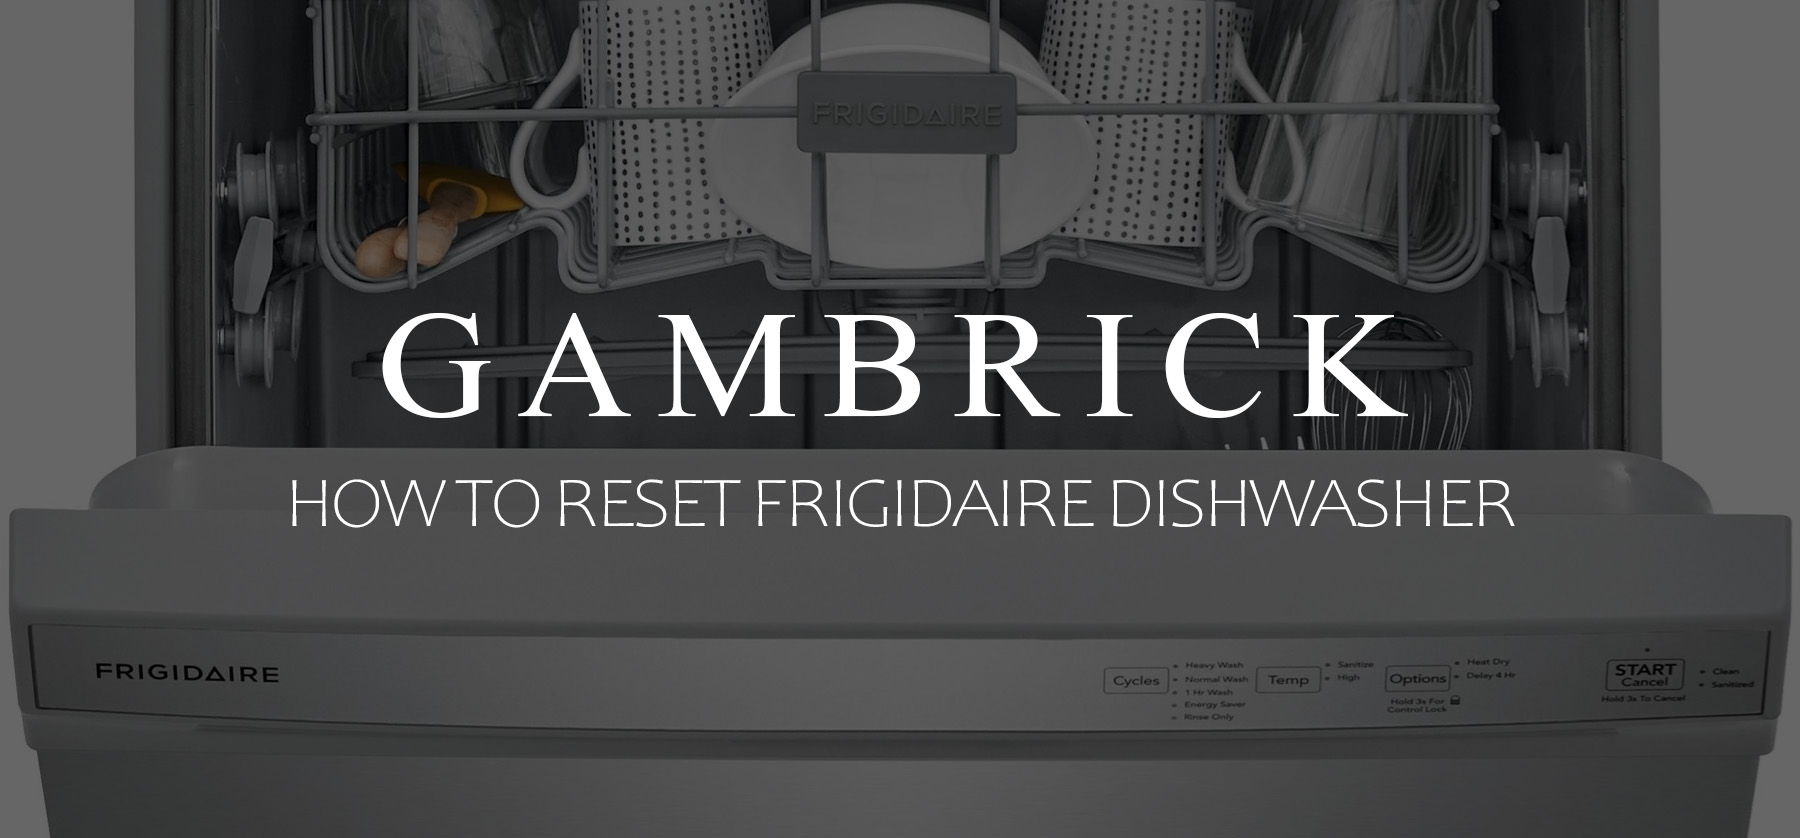 how to reset Frigidaie Dishwasher banner 1.0